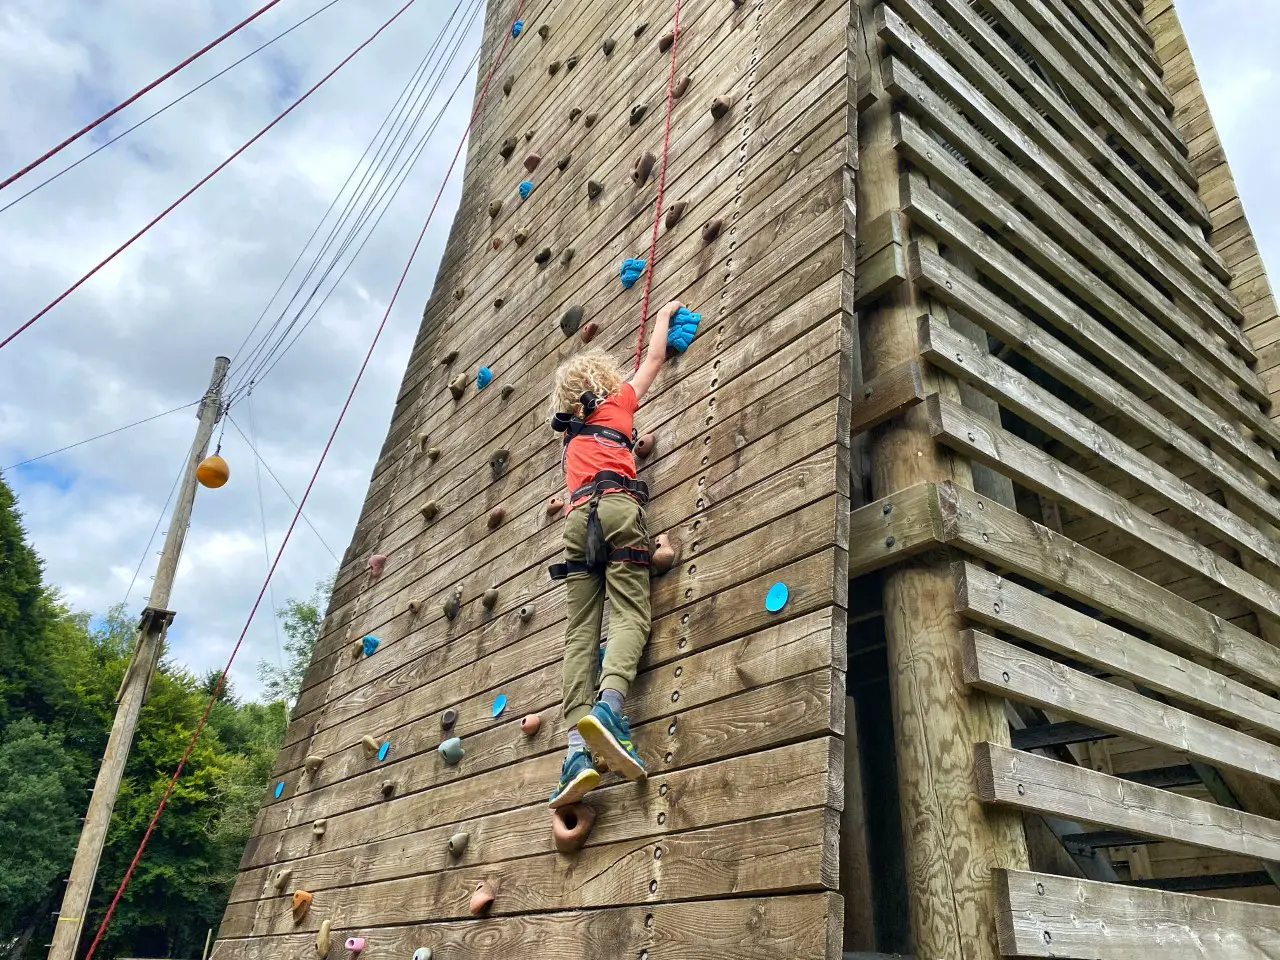 child on an outdoor climbing wall